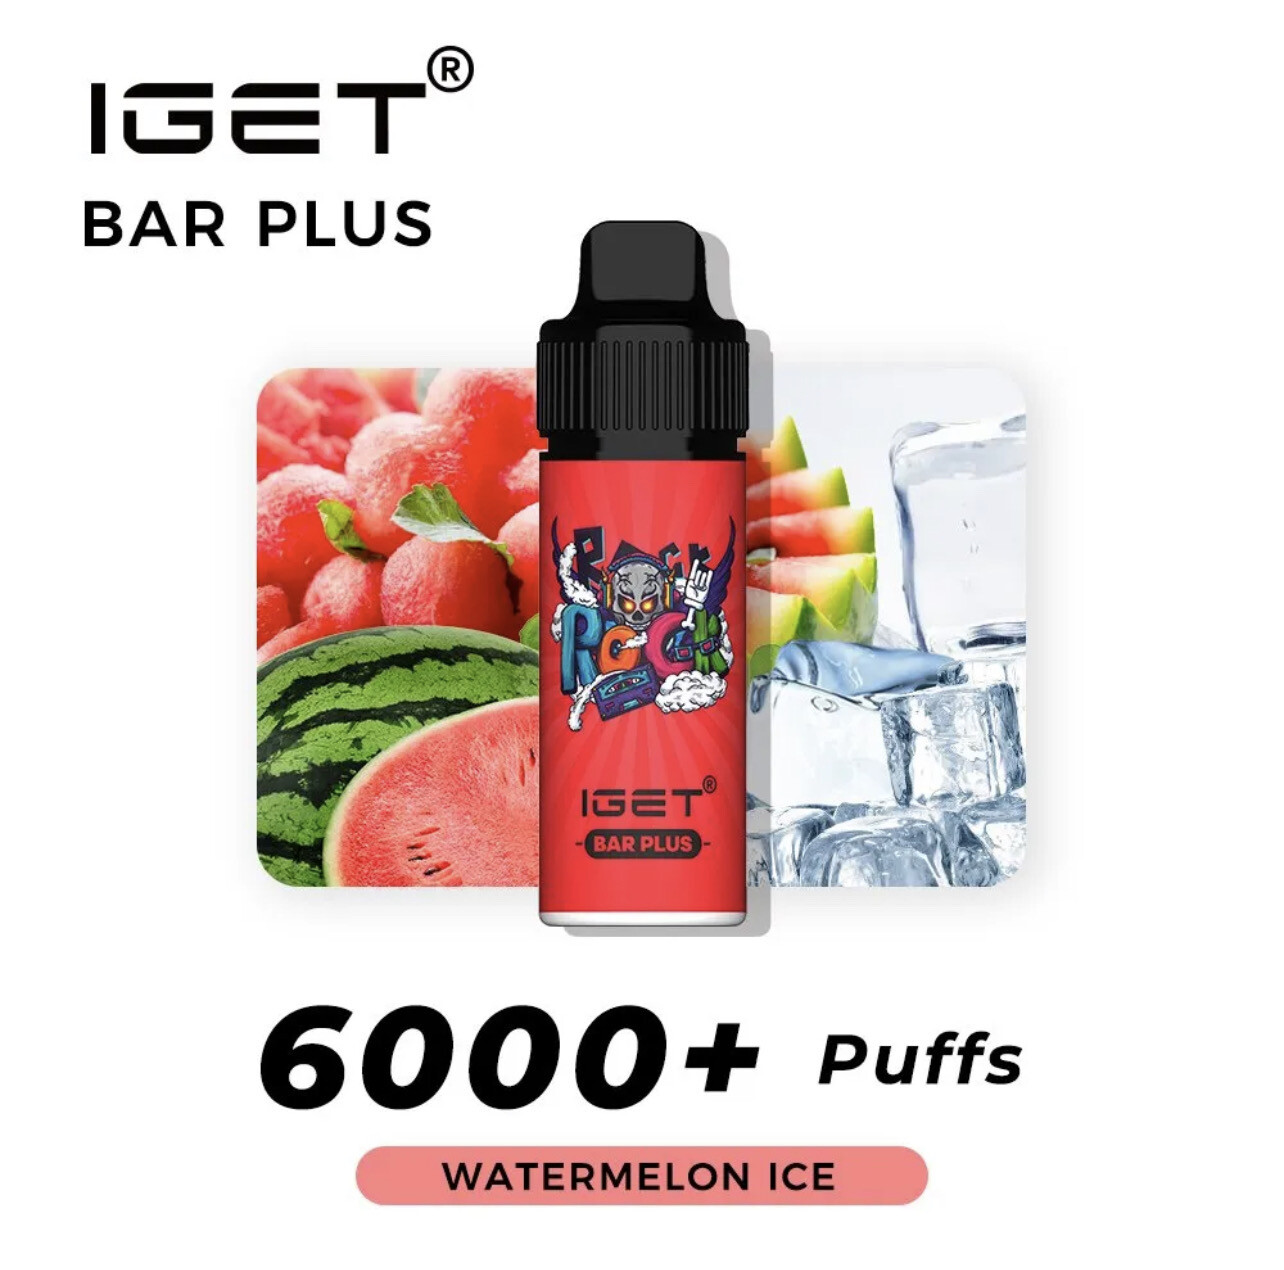 IGET BAR PLUS WATERMELON ICE 6000 PUFFS